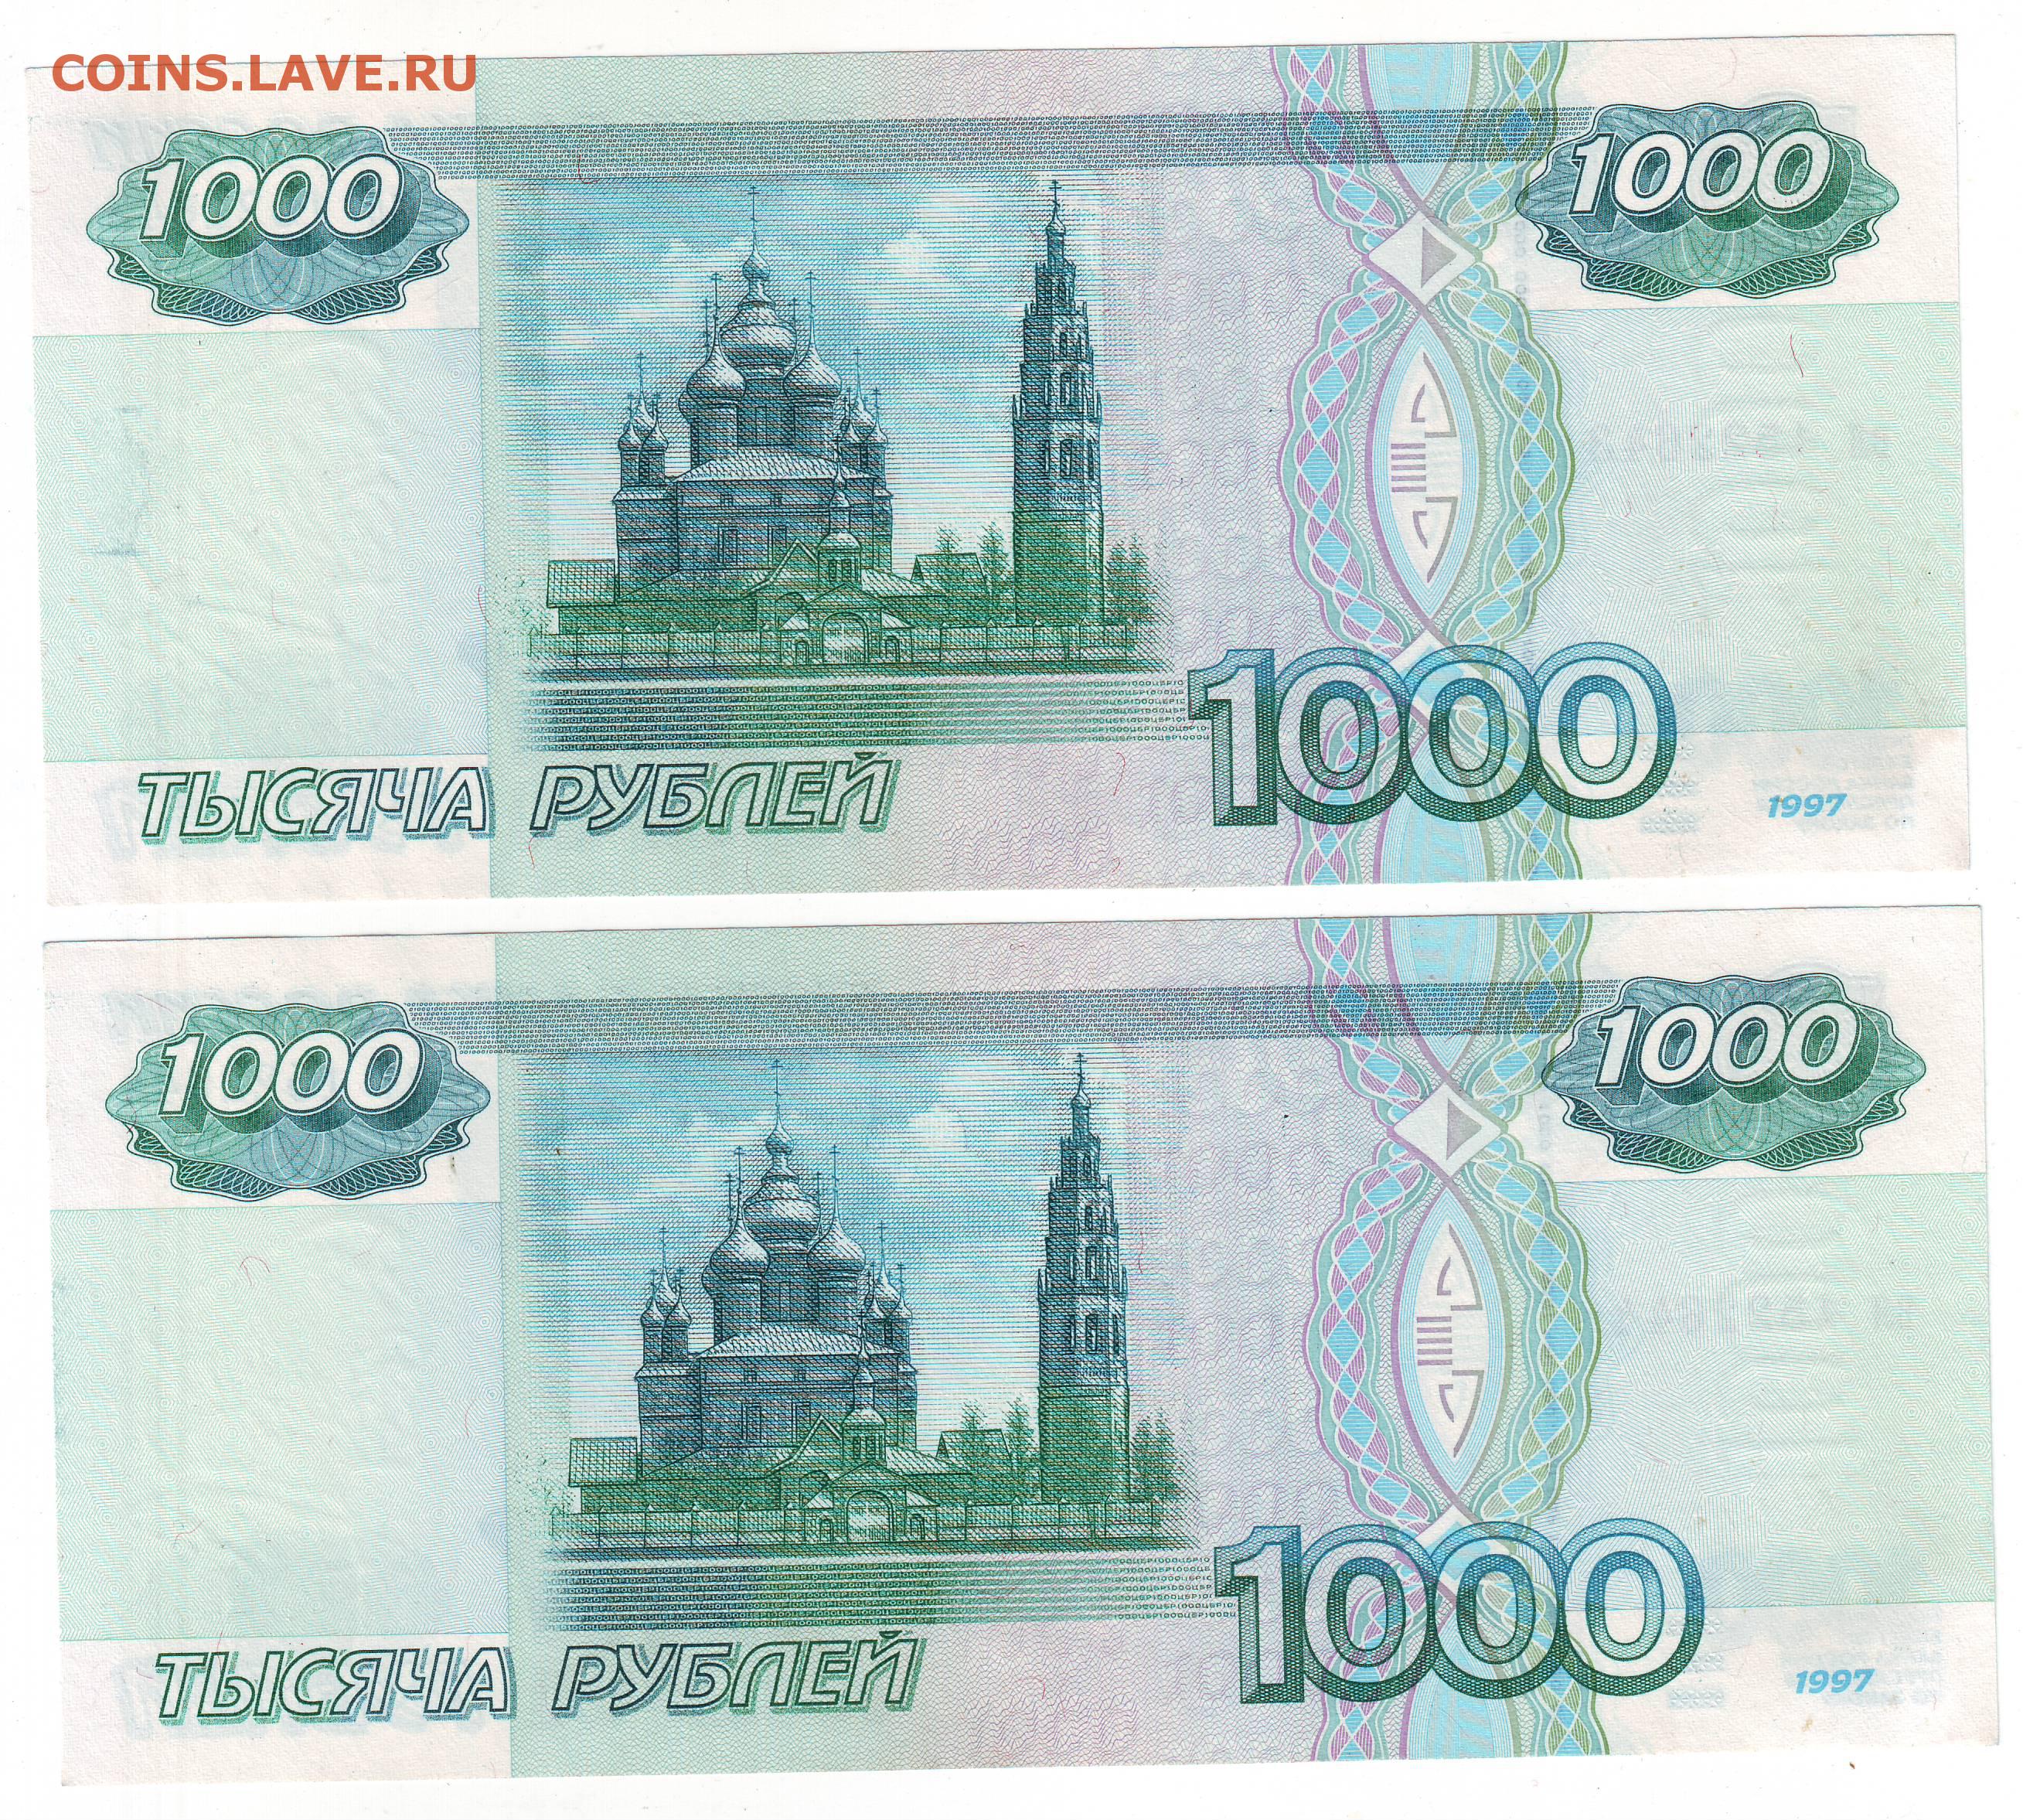 1000 1 18. 1000 Рублей купюра для печати. 1000 Рублей печать. Тысяча рублей для печати. 1000 Рублей с 2 сторон.